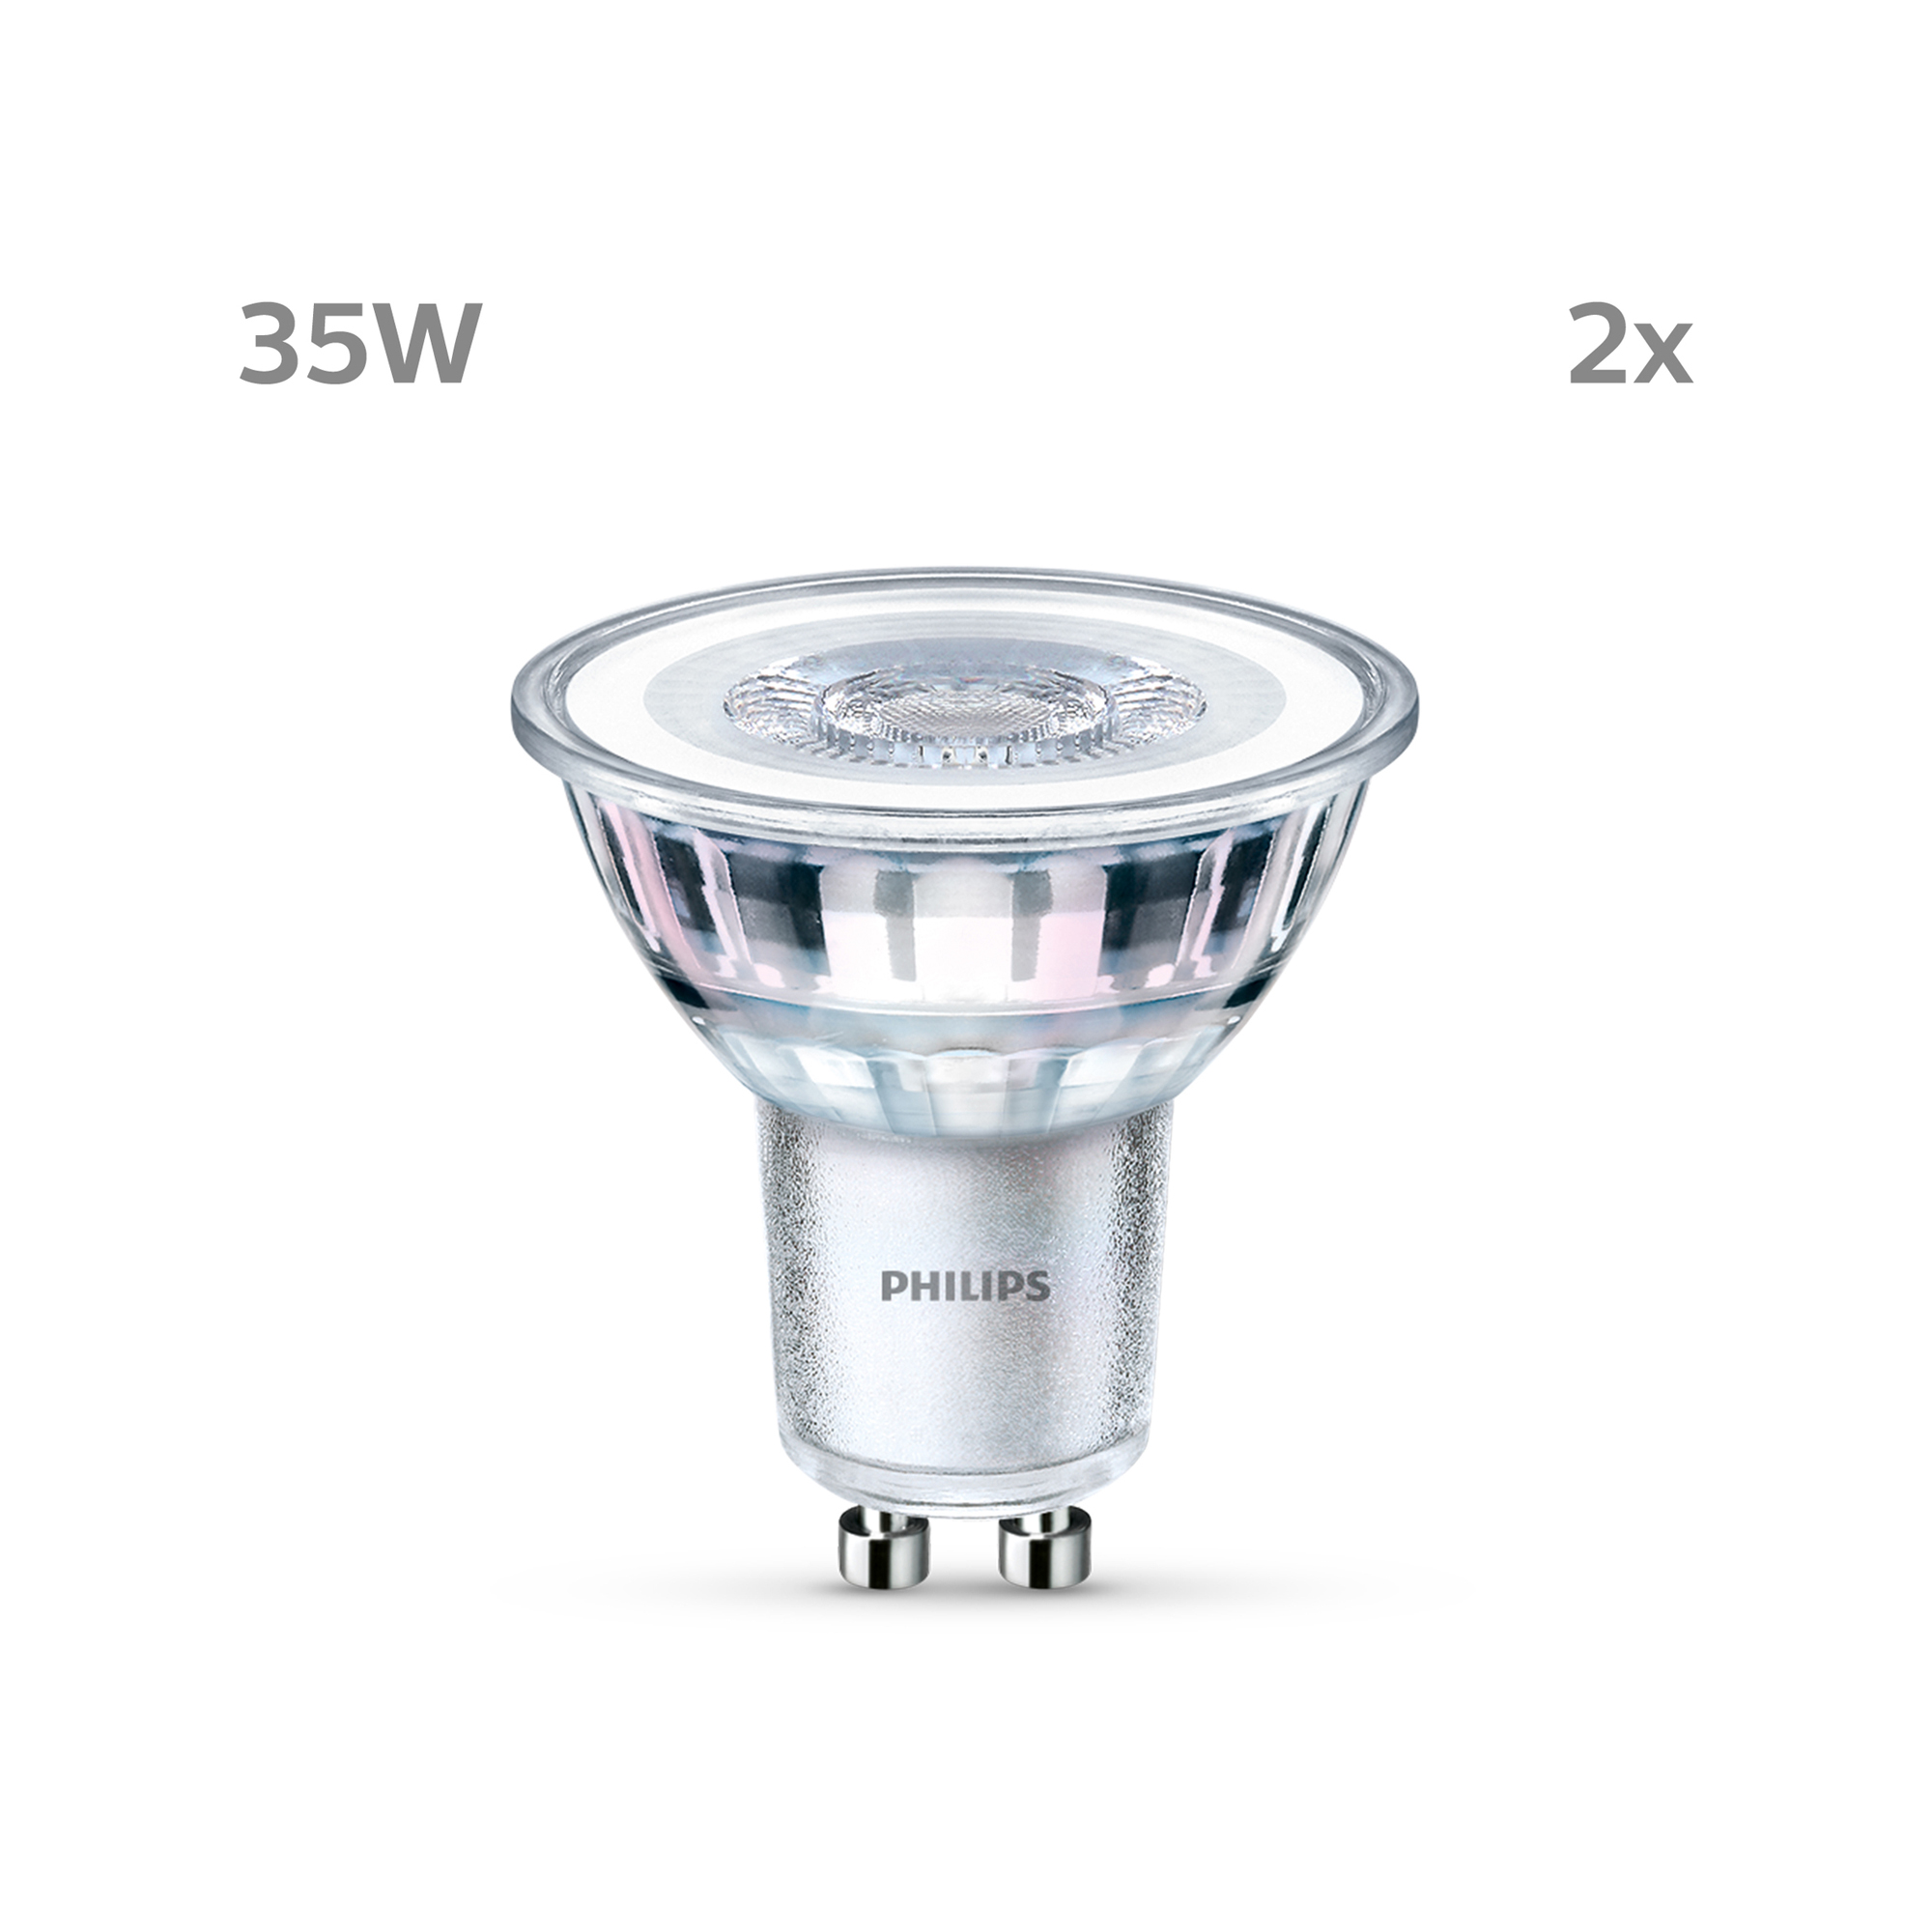 Pachet dublu de Philips Spot LED 3.5-35W GU10 827 36° 255lm 2700K